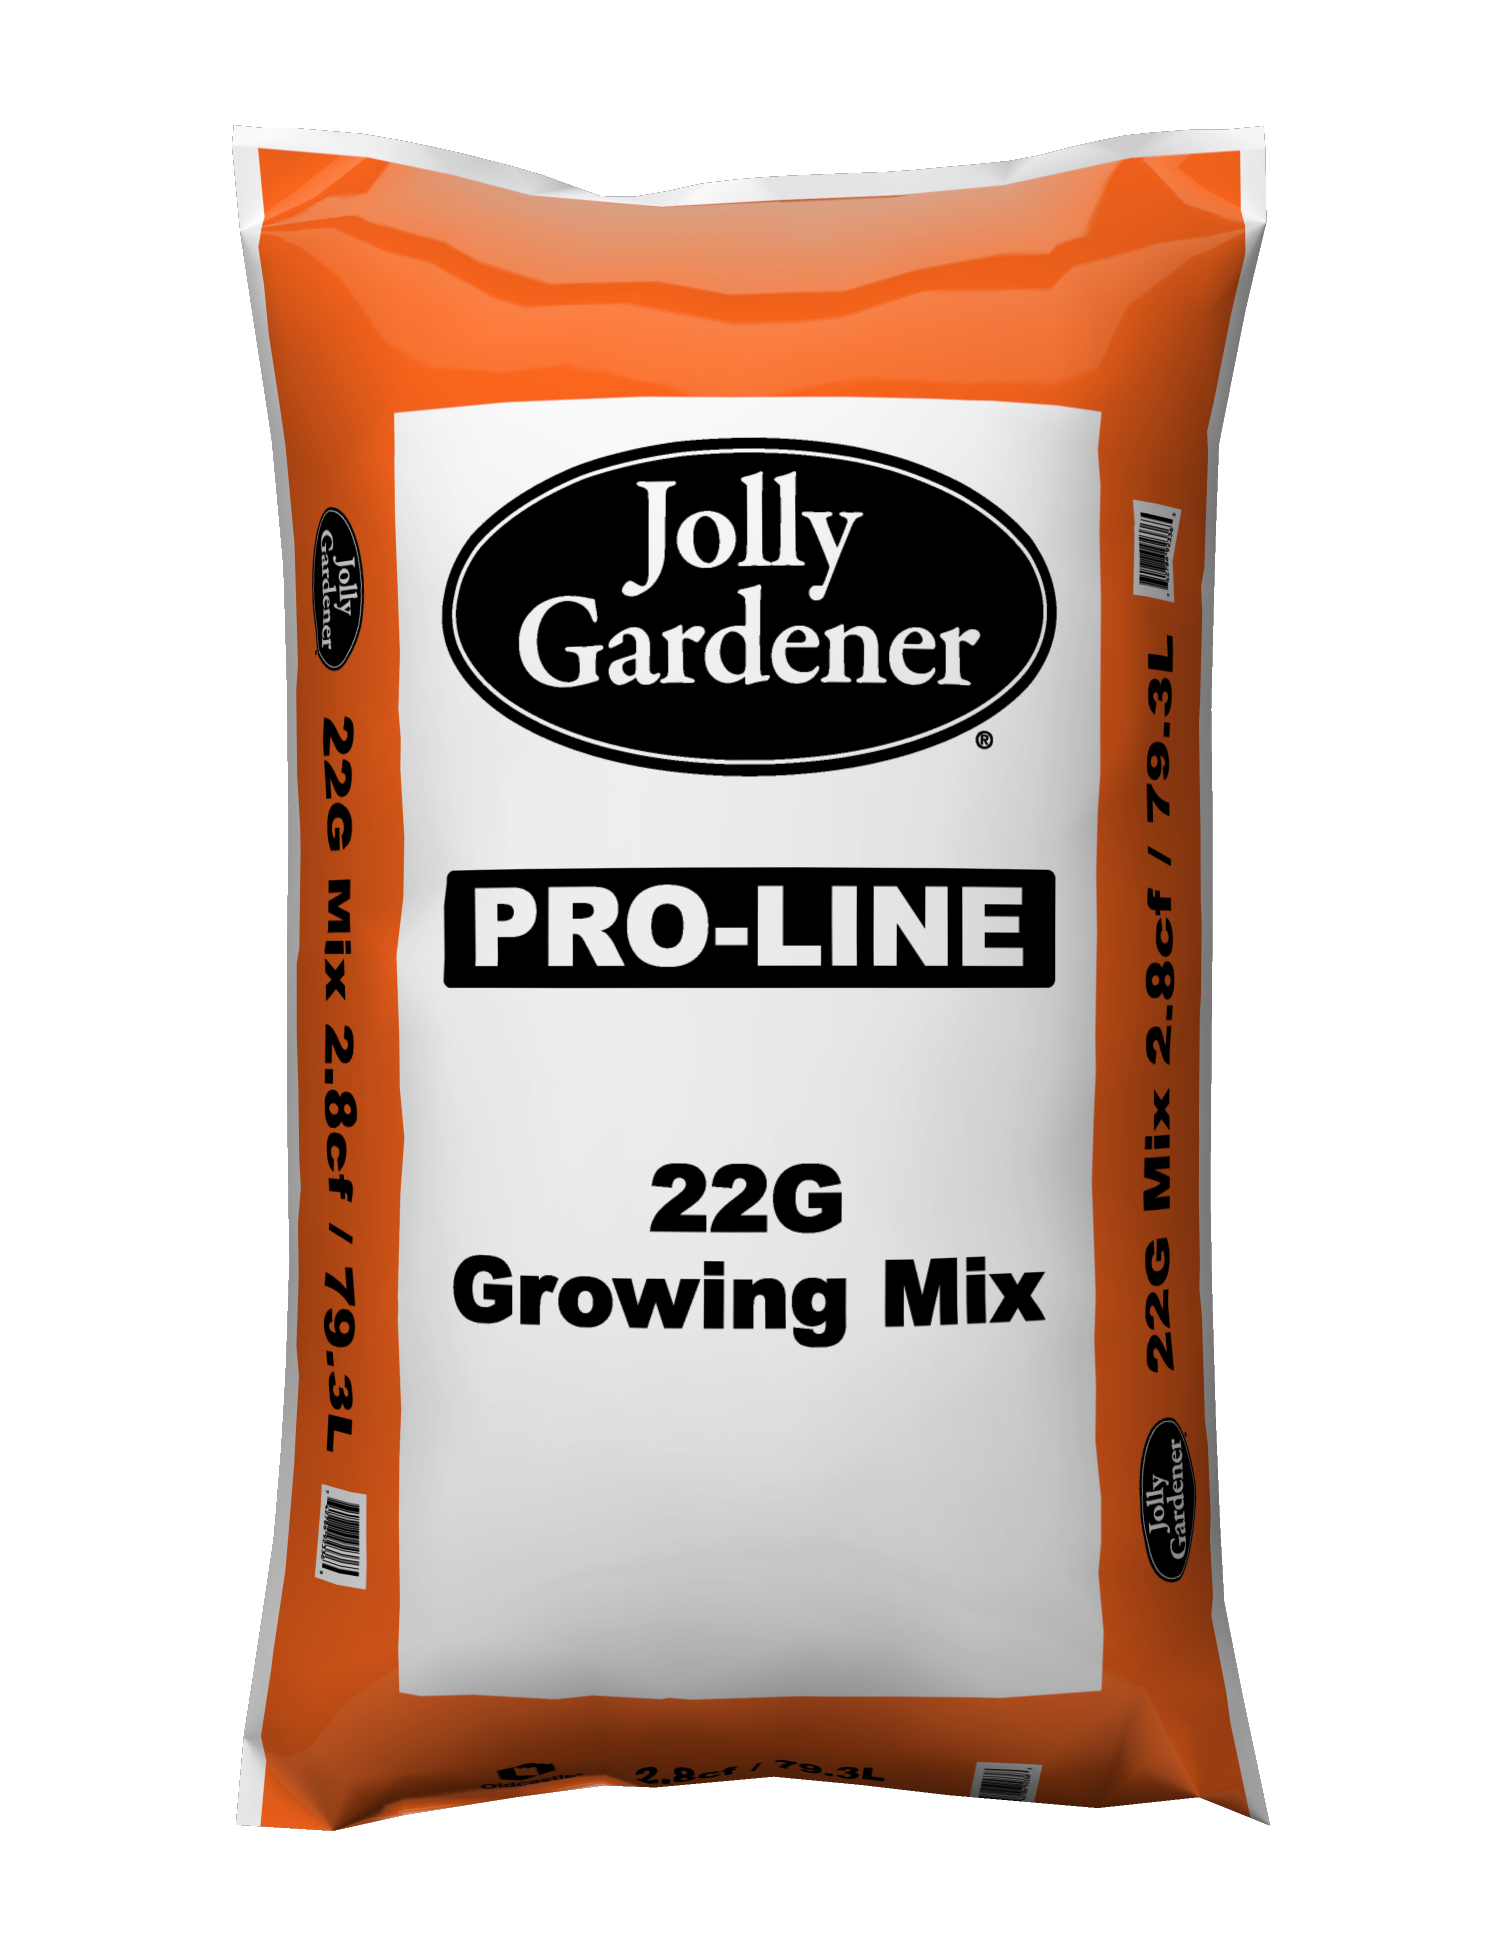 Jolly Gardener Pro Line 22G Mix - 2.8 Cu. Ft. bag